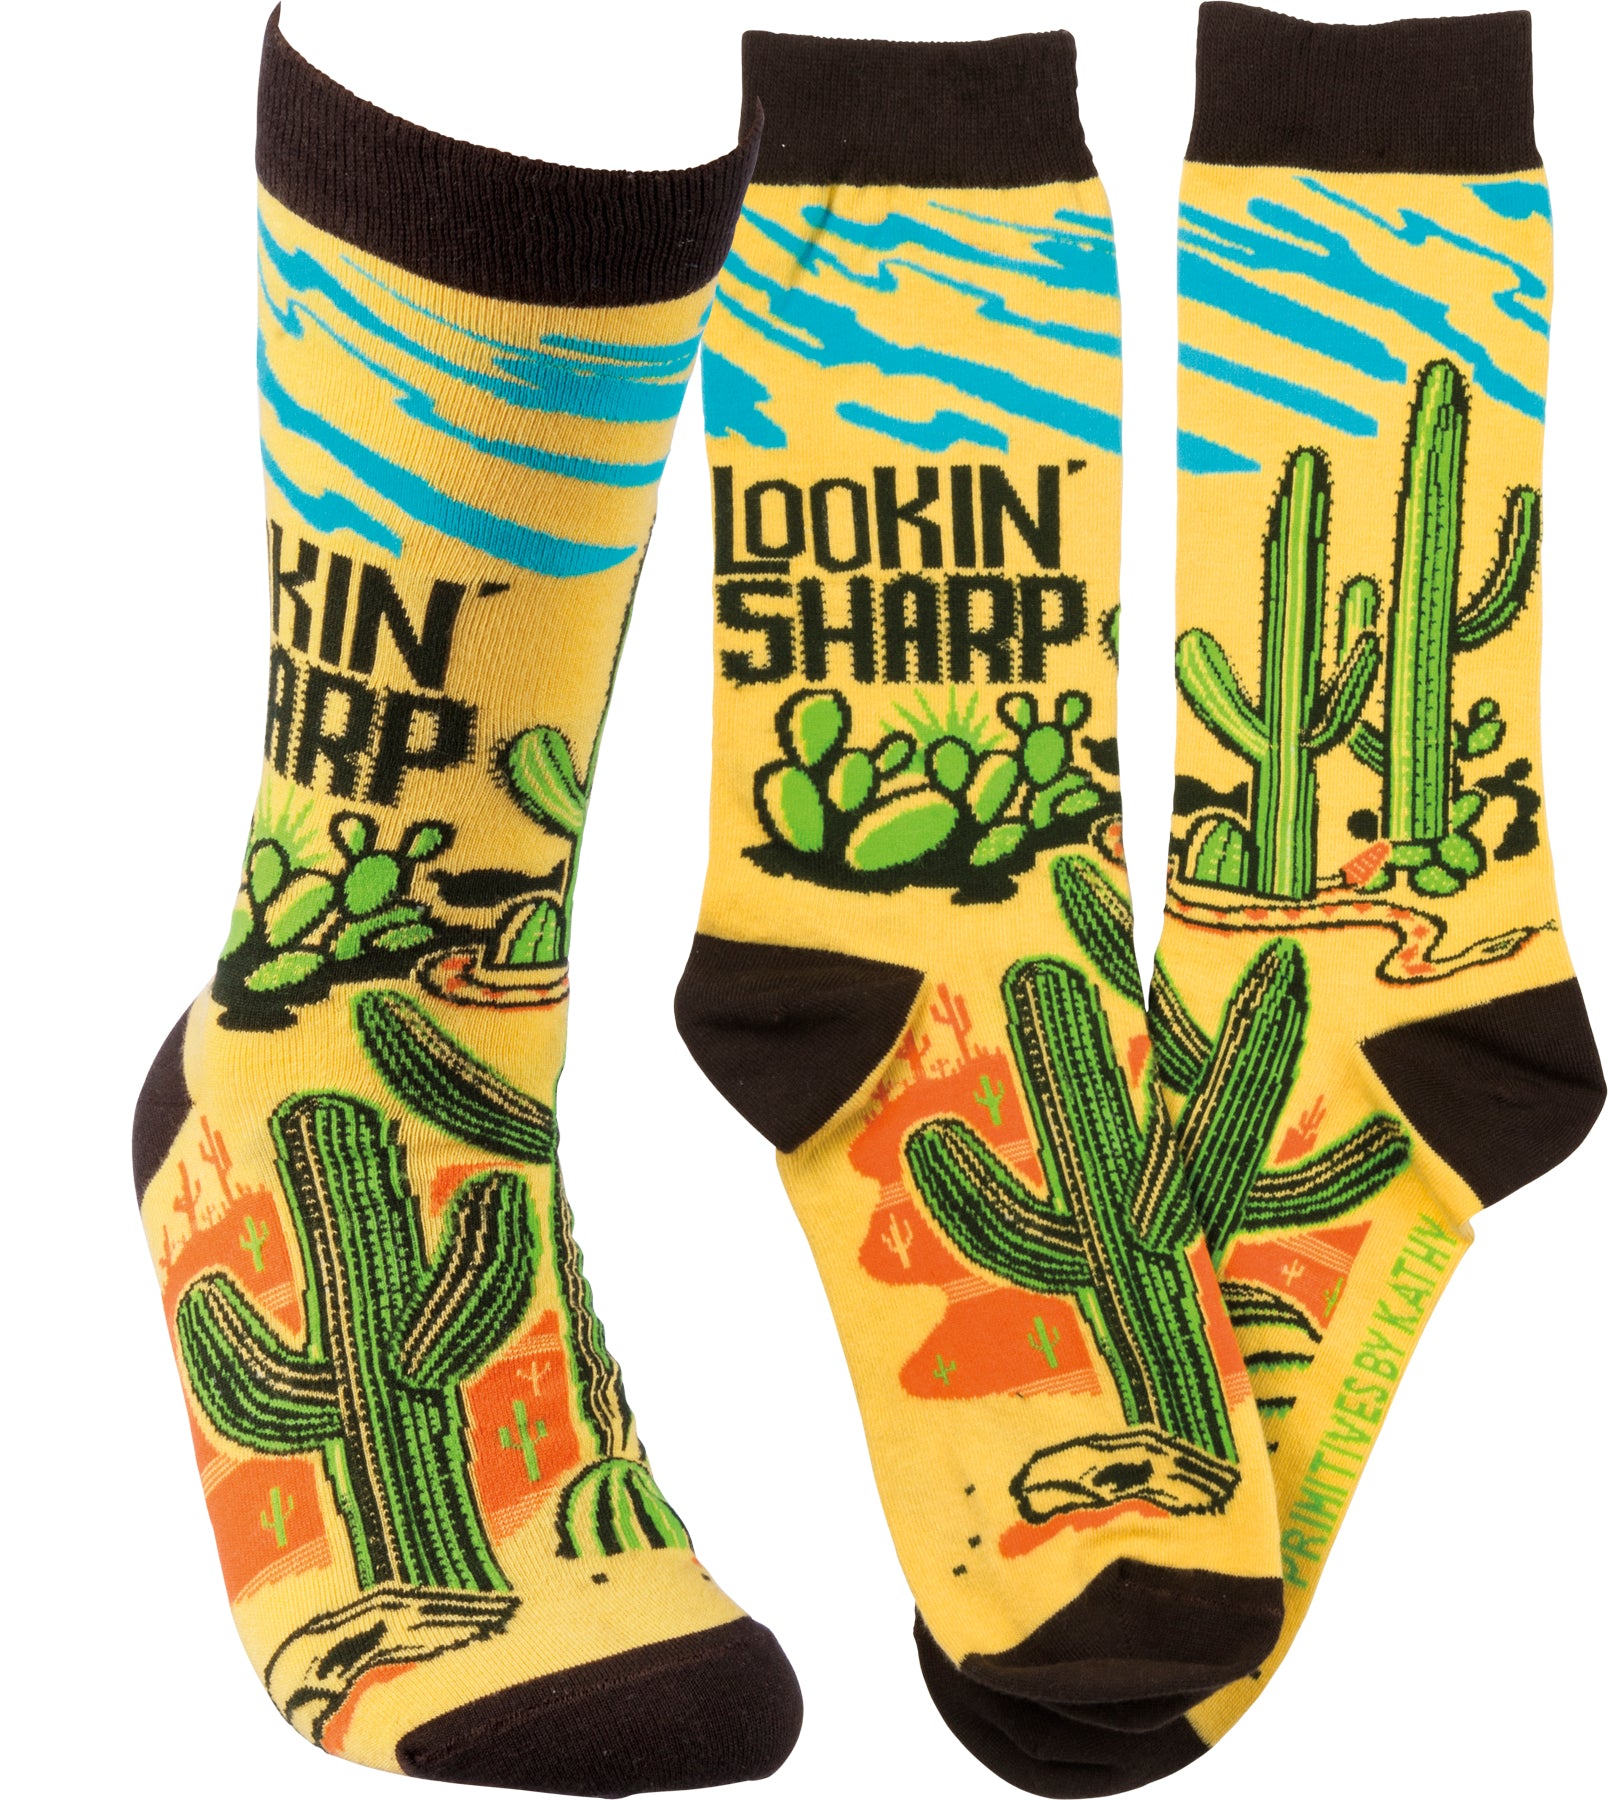 Socks - Lookin' Sharp